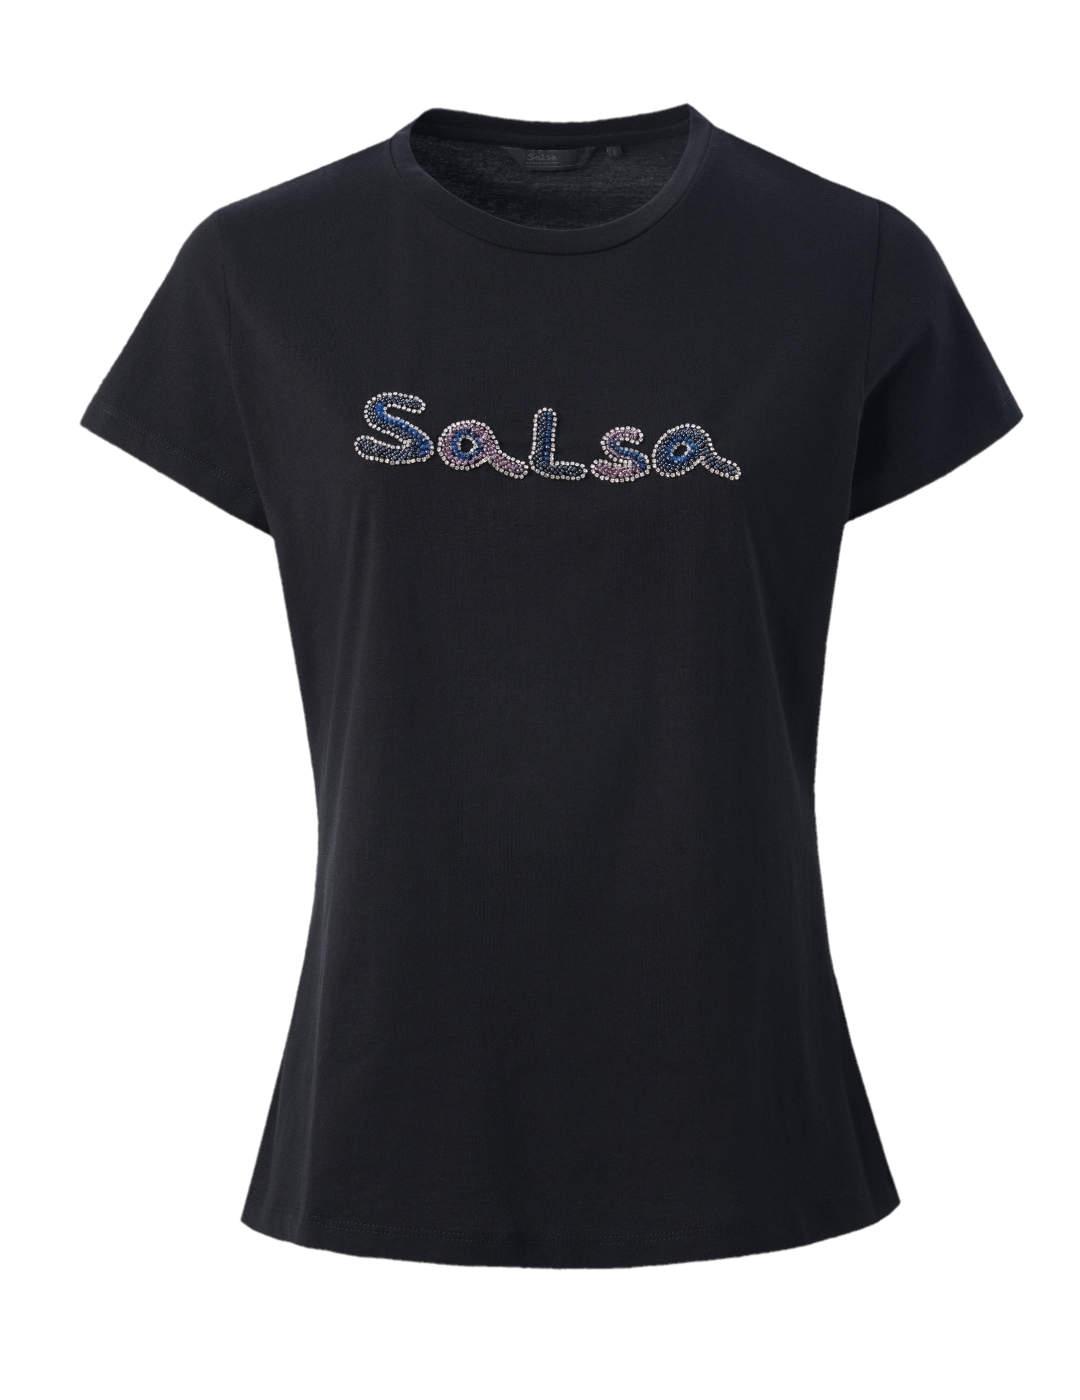 Camiseta Salsa branding negra para mujer -b